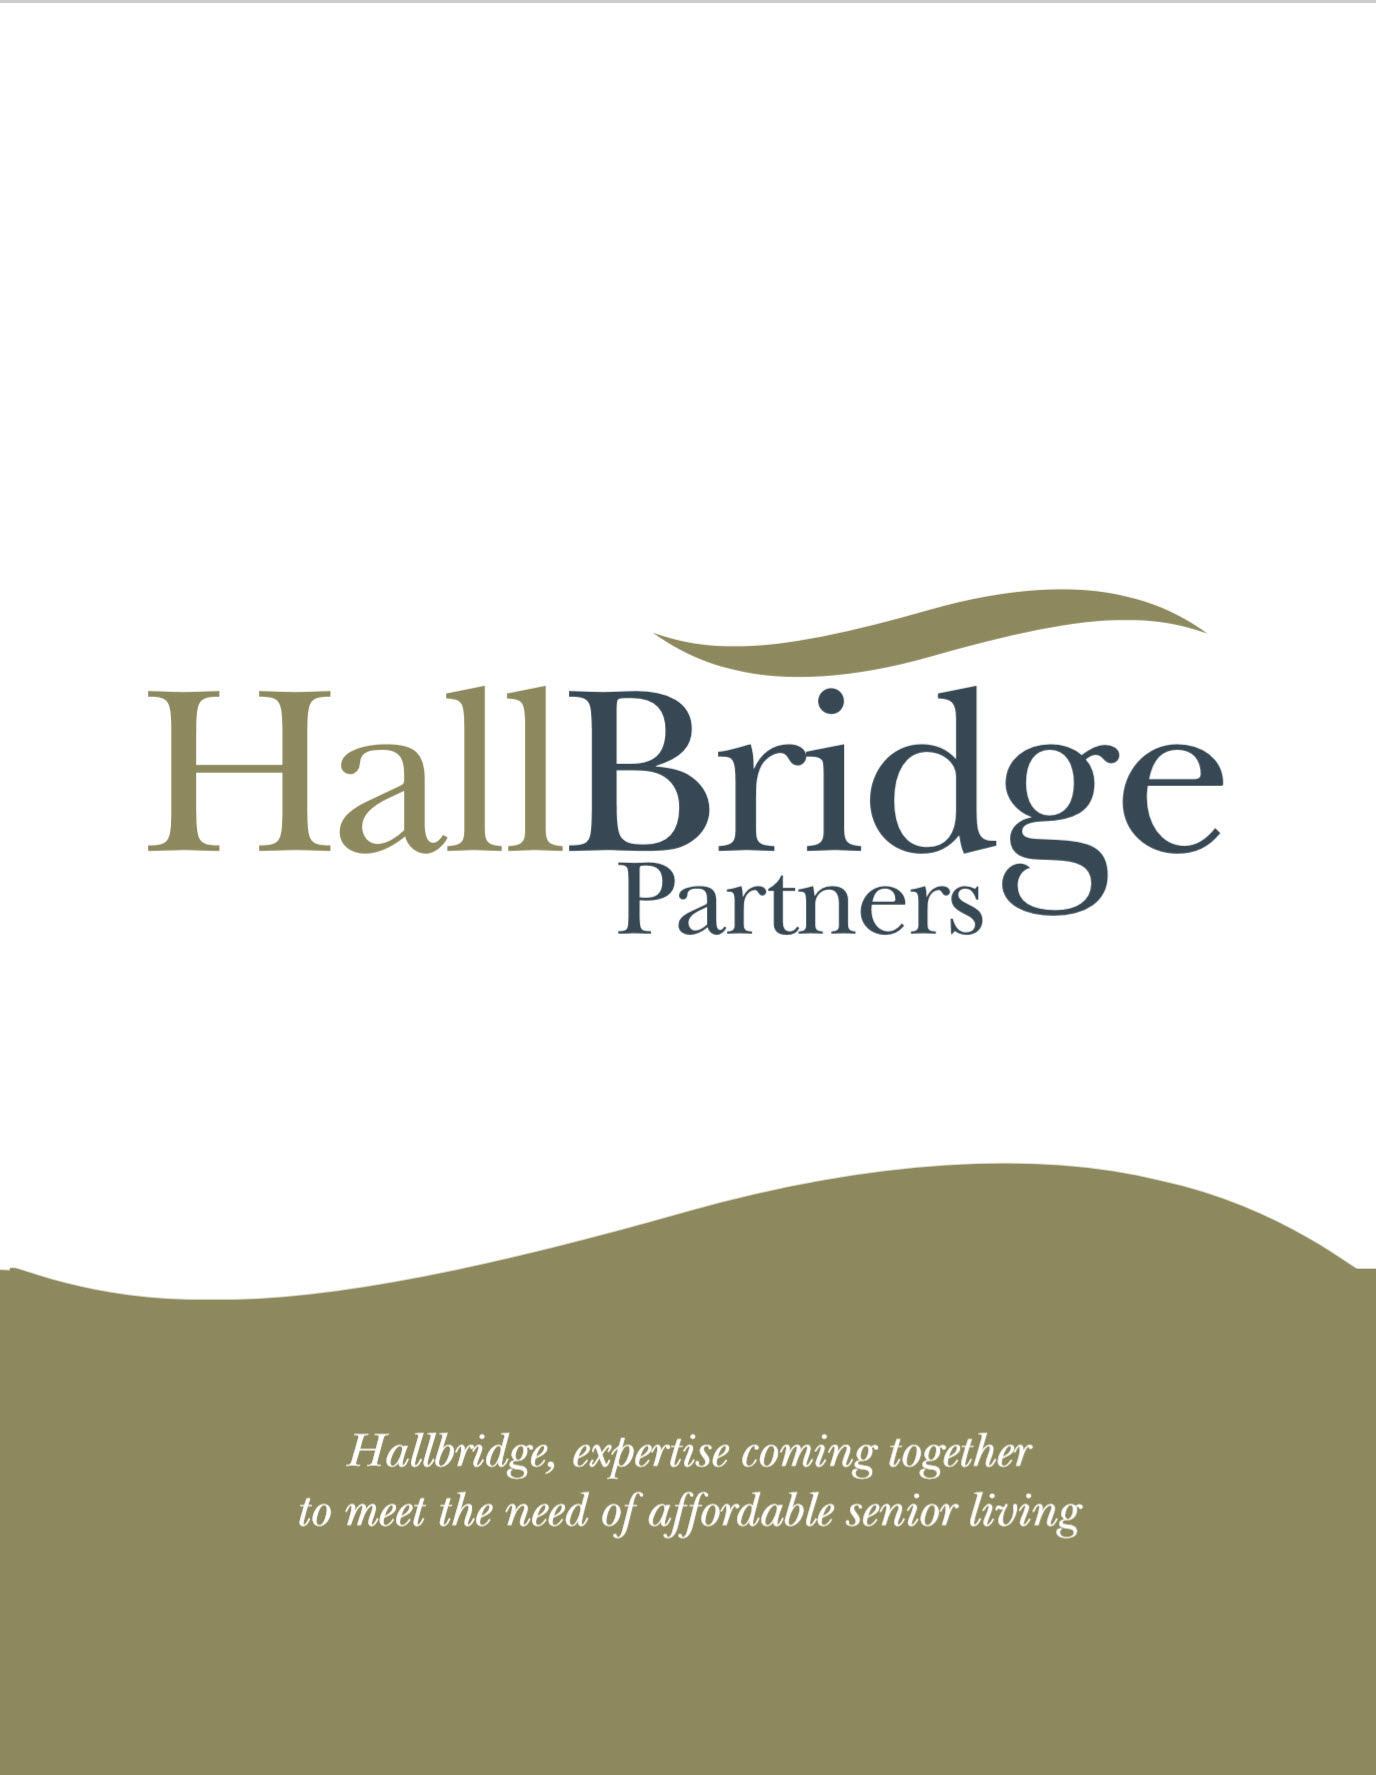 HallBridge Partners Overview